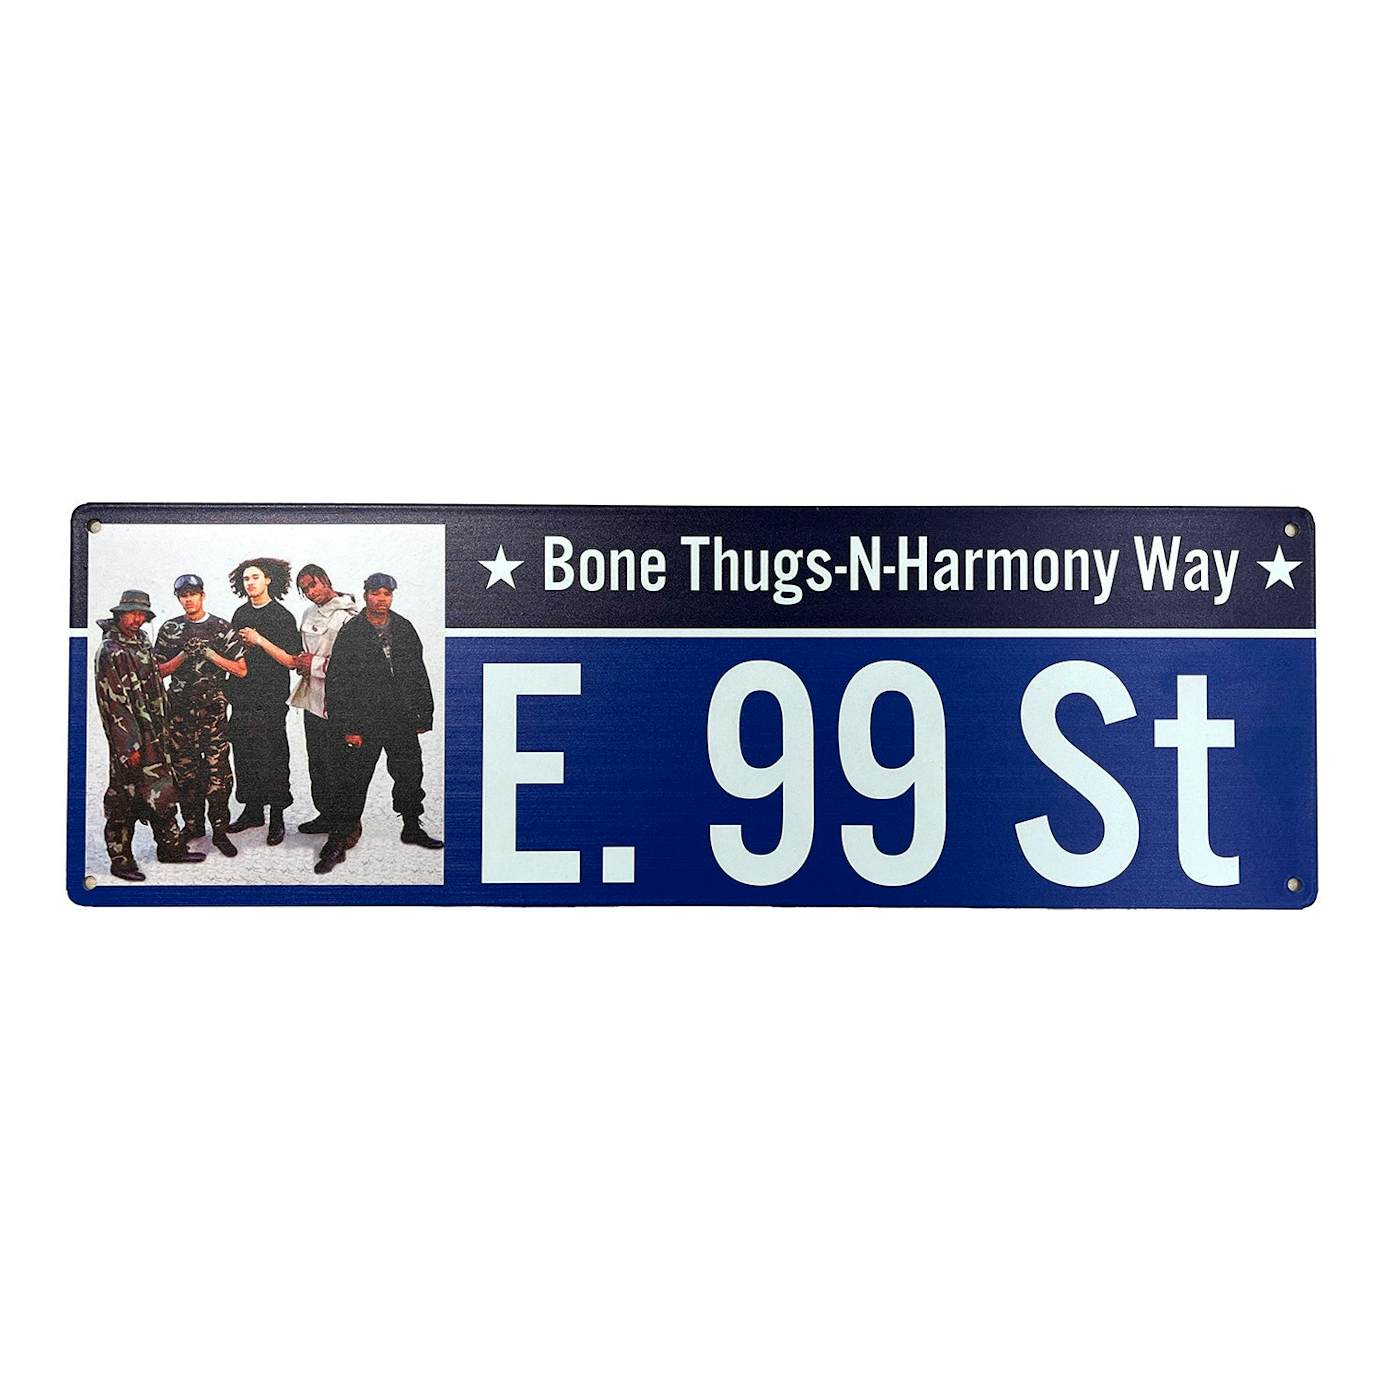 Bone Thugs-N-Harmony Way "Metal Street Sign" 18.25 x 5.5 inches